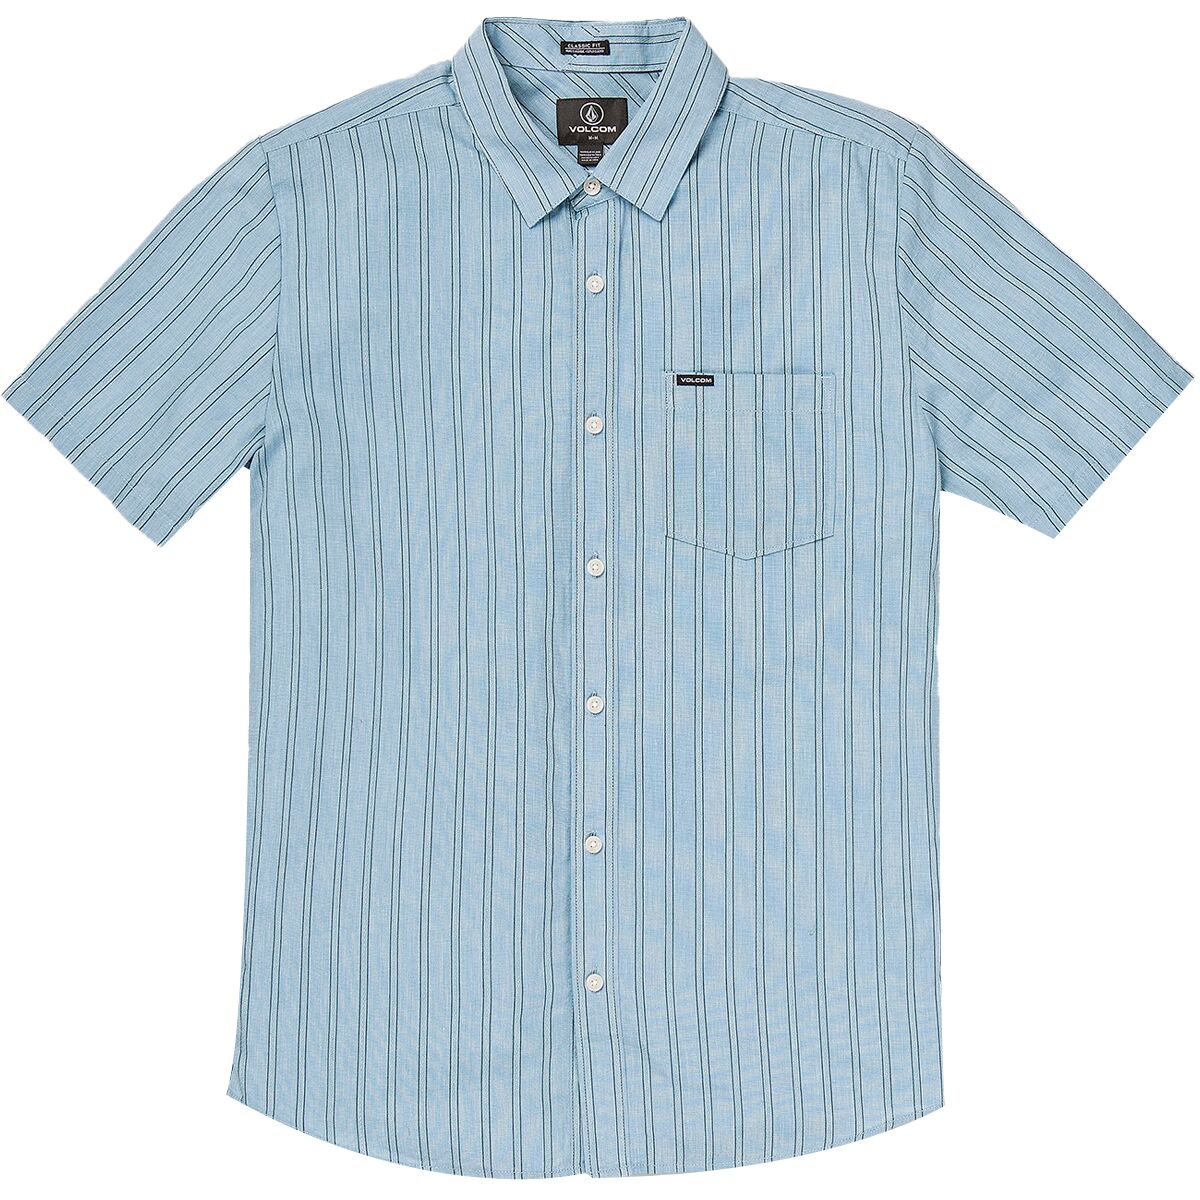 Volcom Watson Short-Sleeve Shirt - Men's